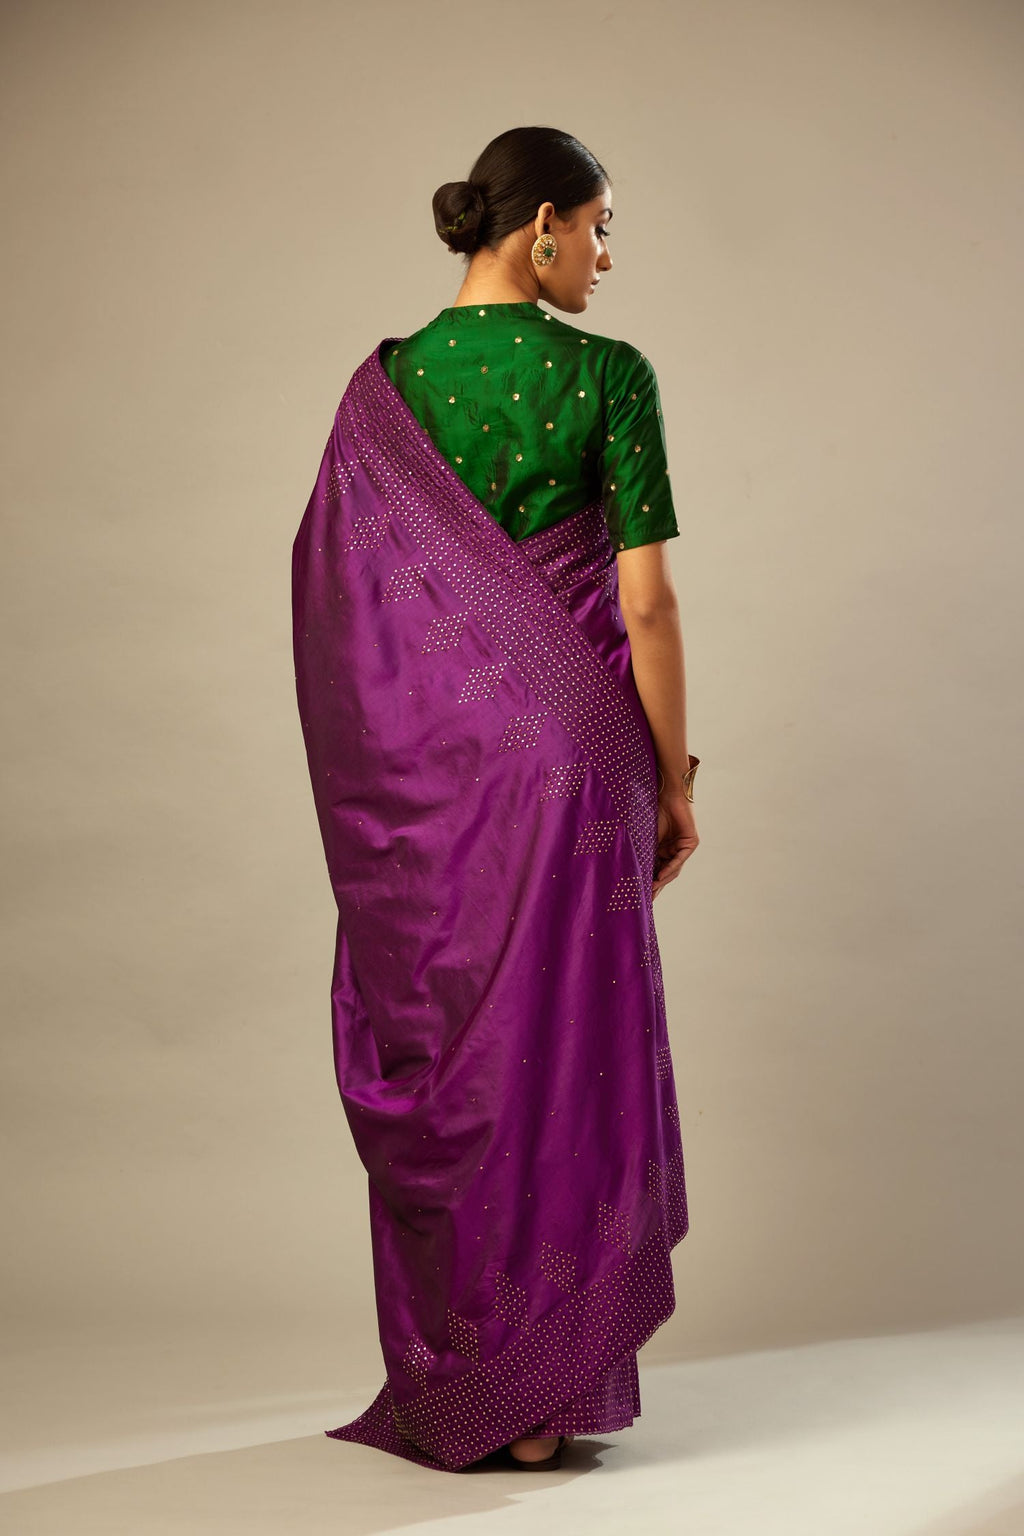 Plum purple silk saree set with a broad sequin border with diamond motifs.